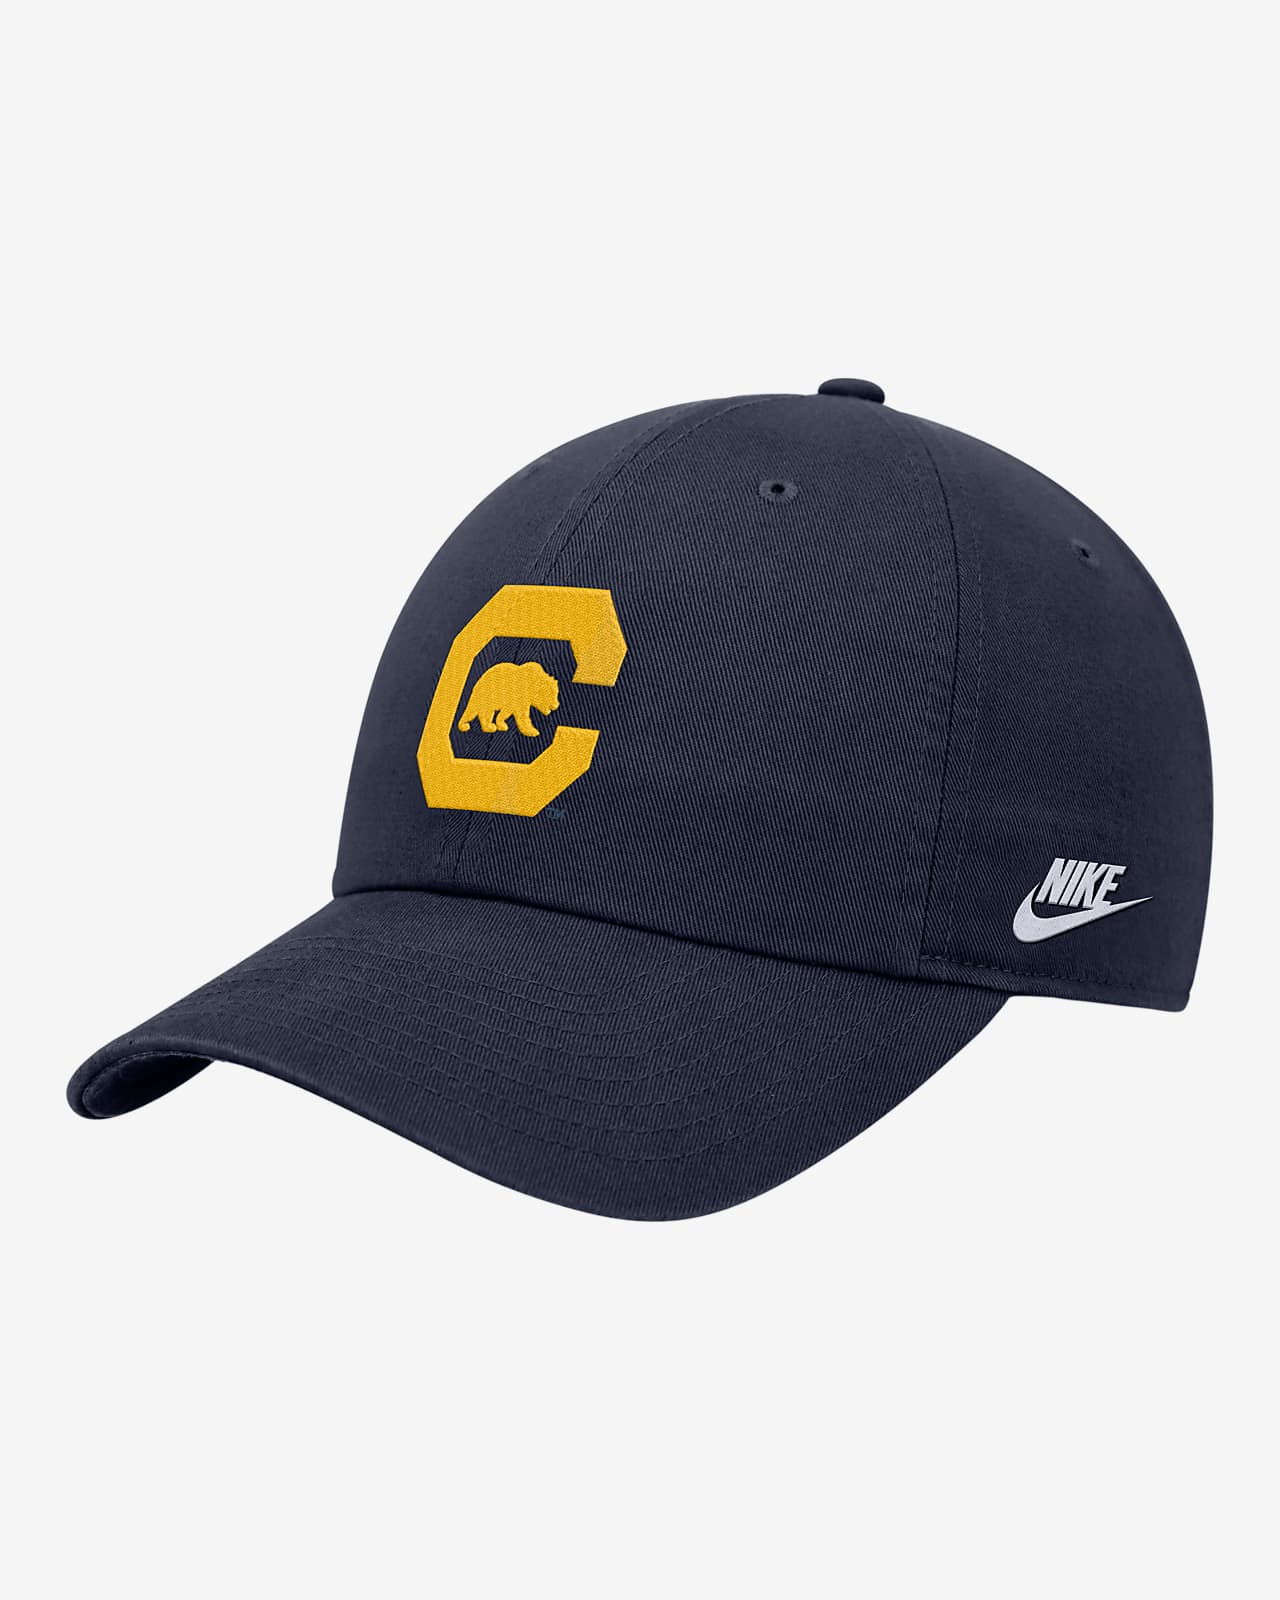 Cal Nike College Cap